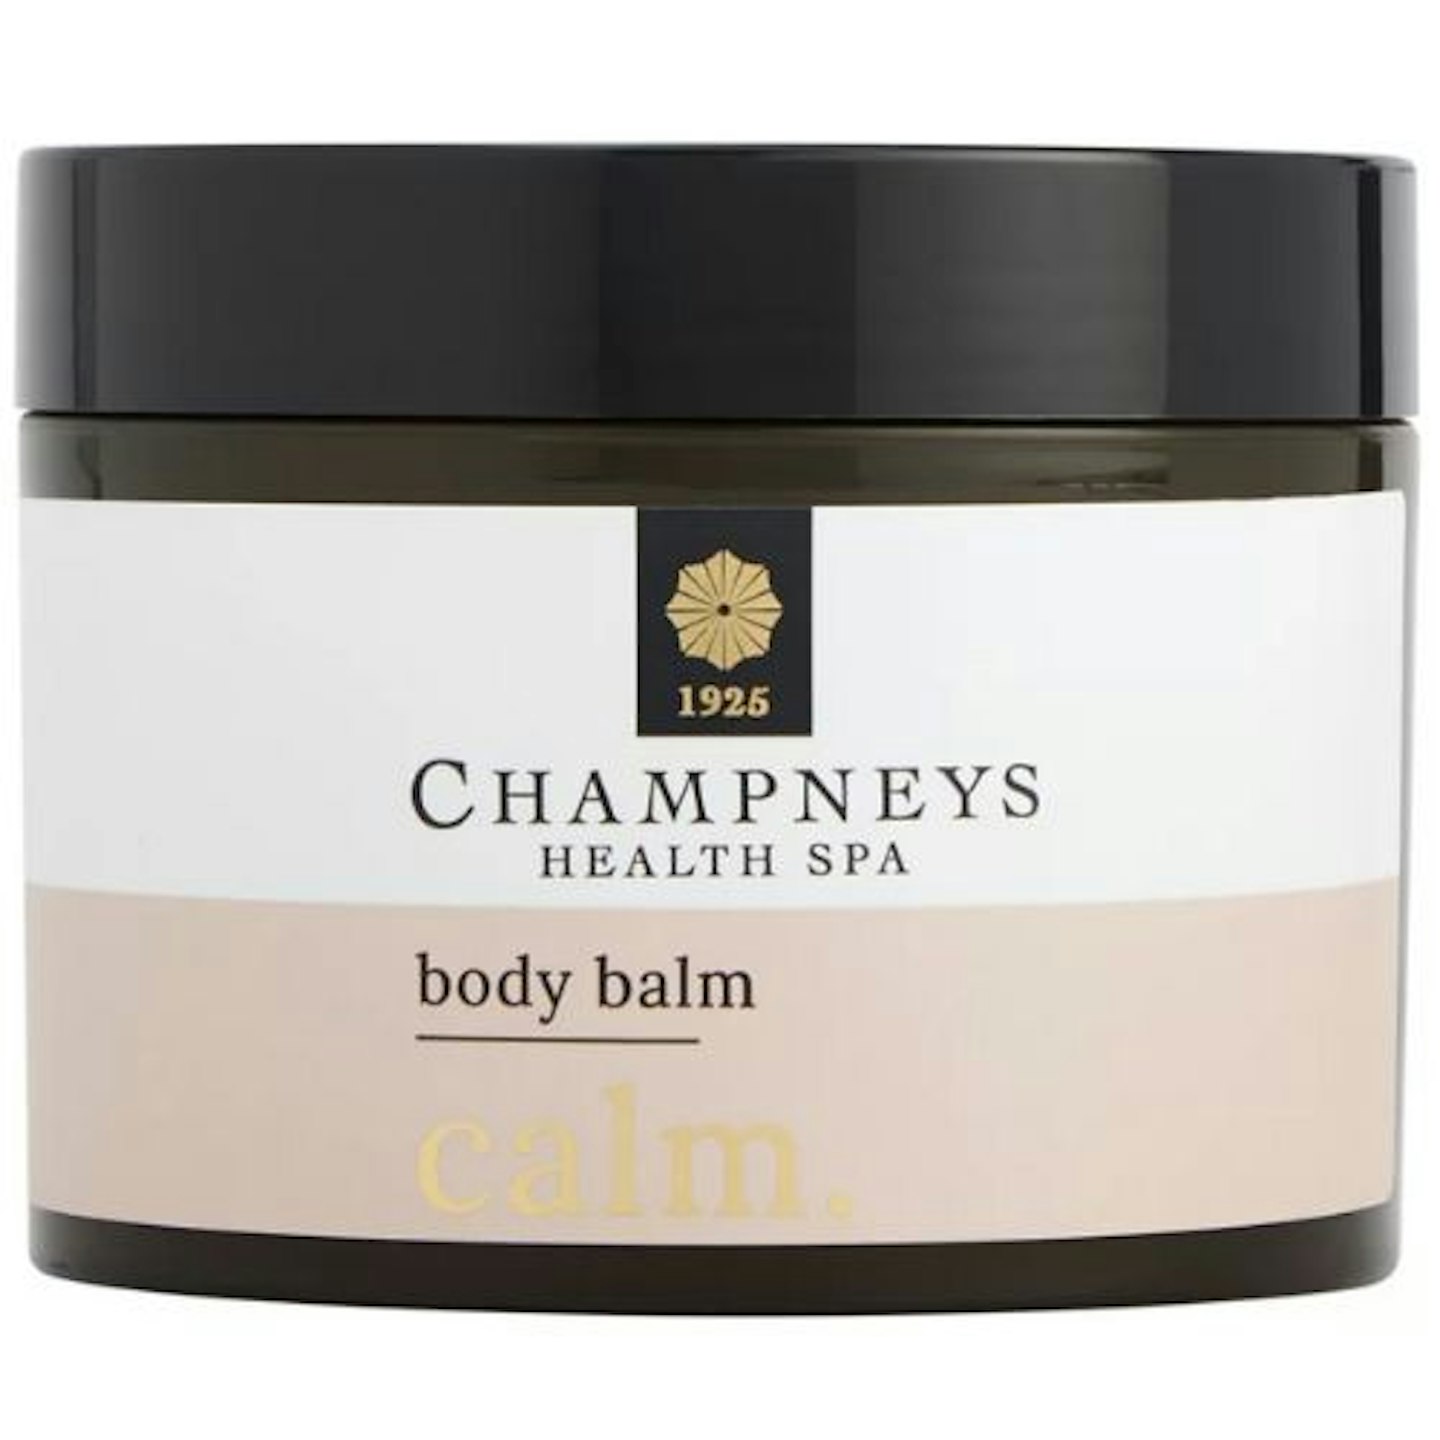 Champneys Calm Body Balm